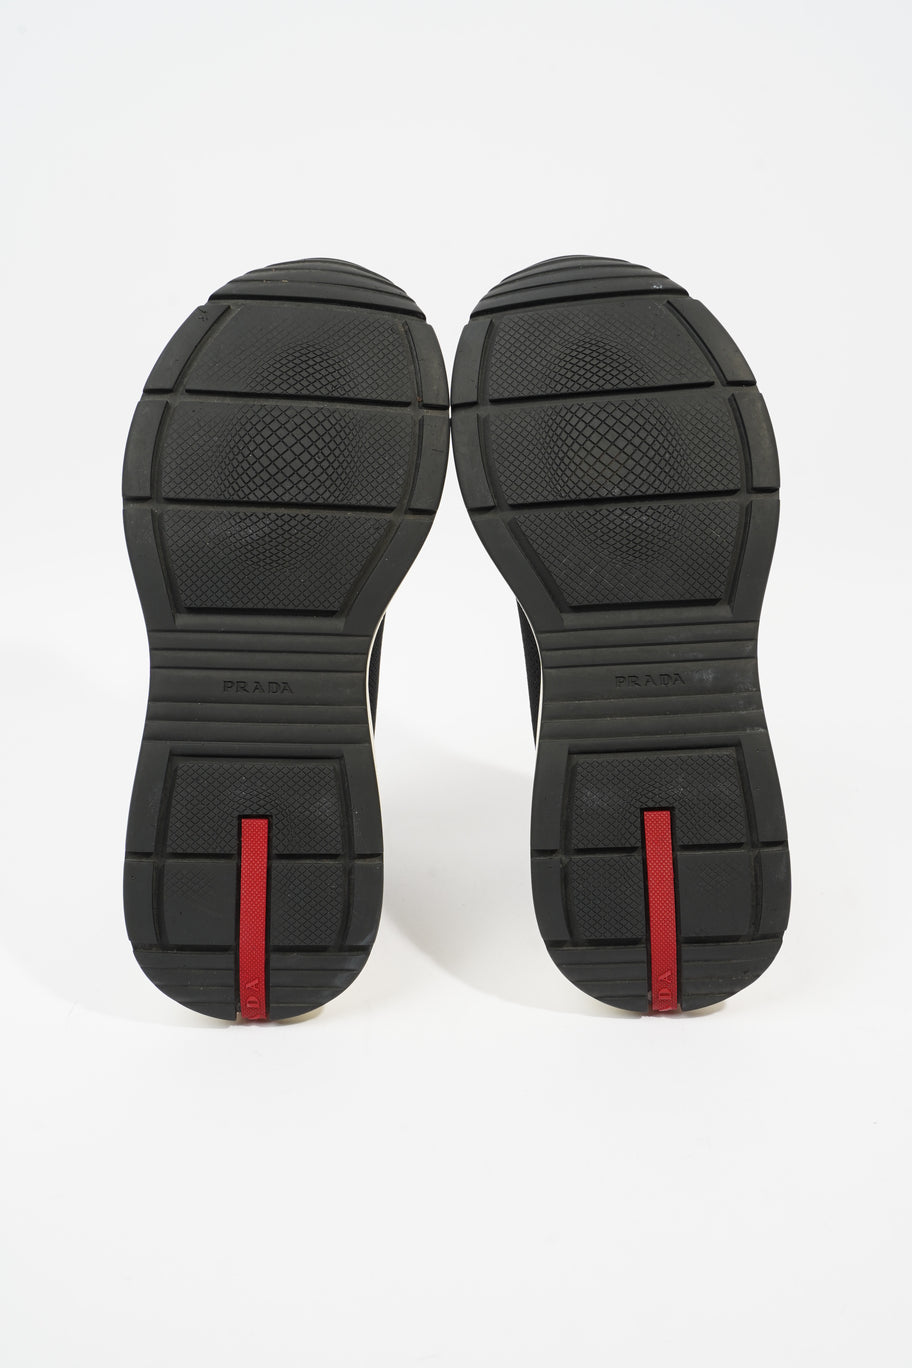 Neoprene Sneakers Black / Red Technical Fabric EU 40 UK 6 Image 7